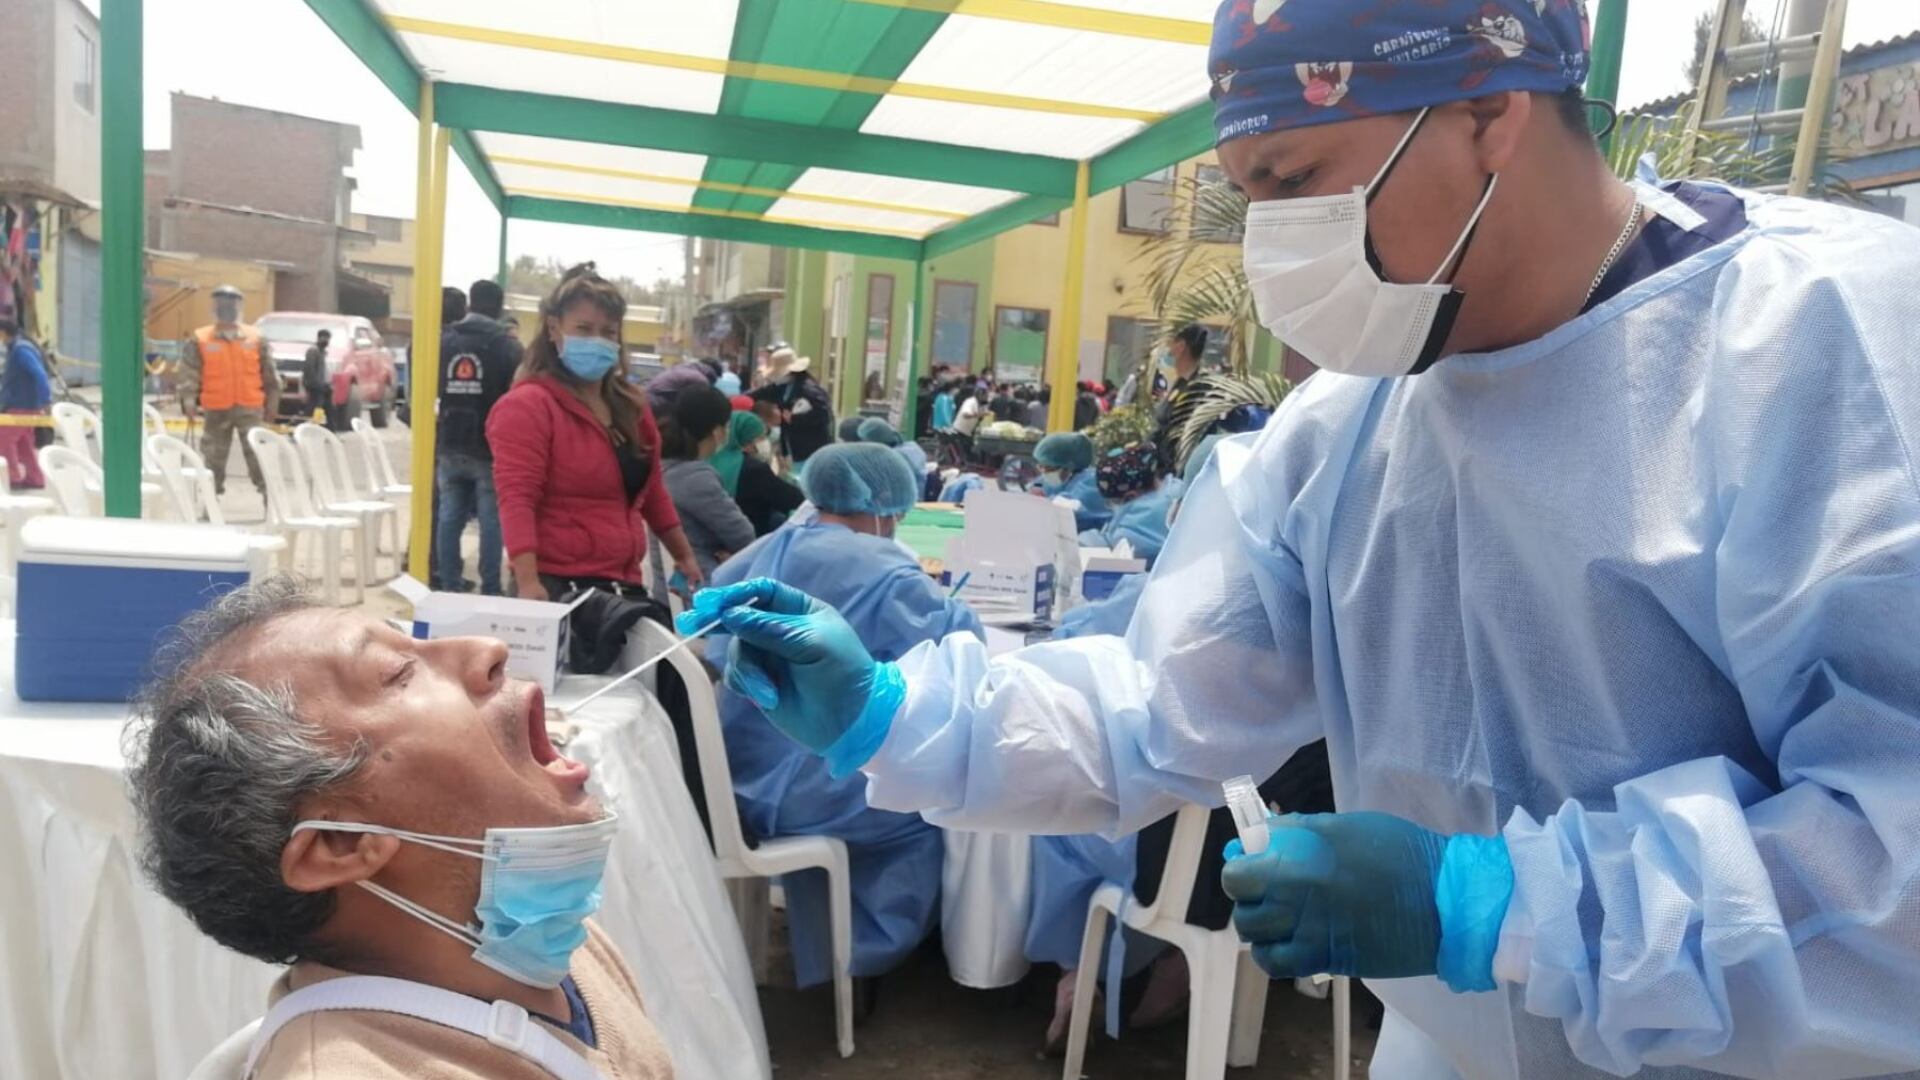 COVID-19: Ministerio de Salud advierte incremento de casos de linaje XBB.1.5
Foto: Andina